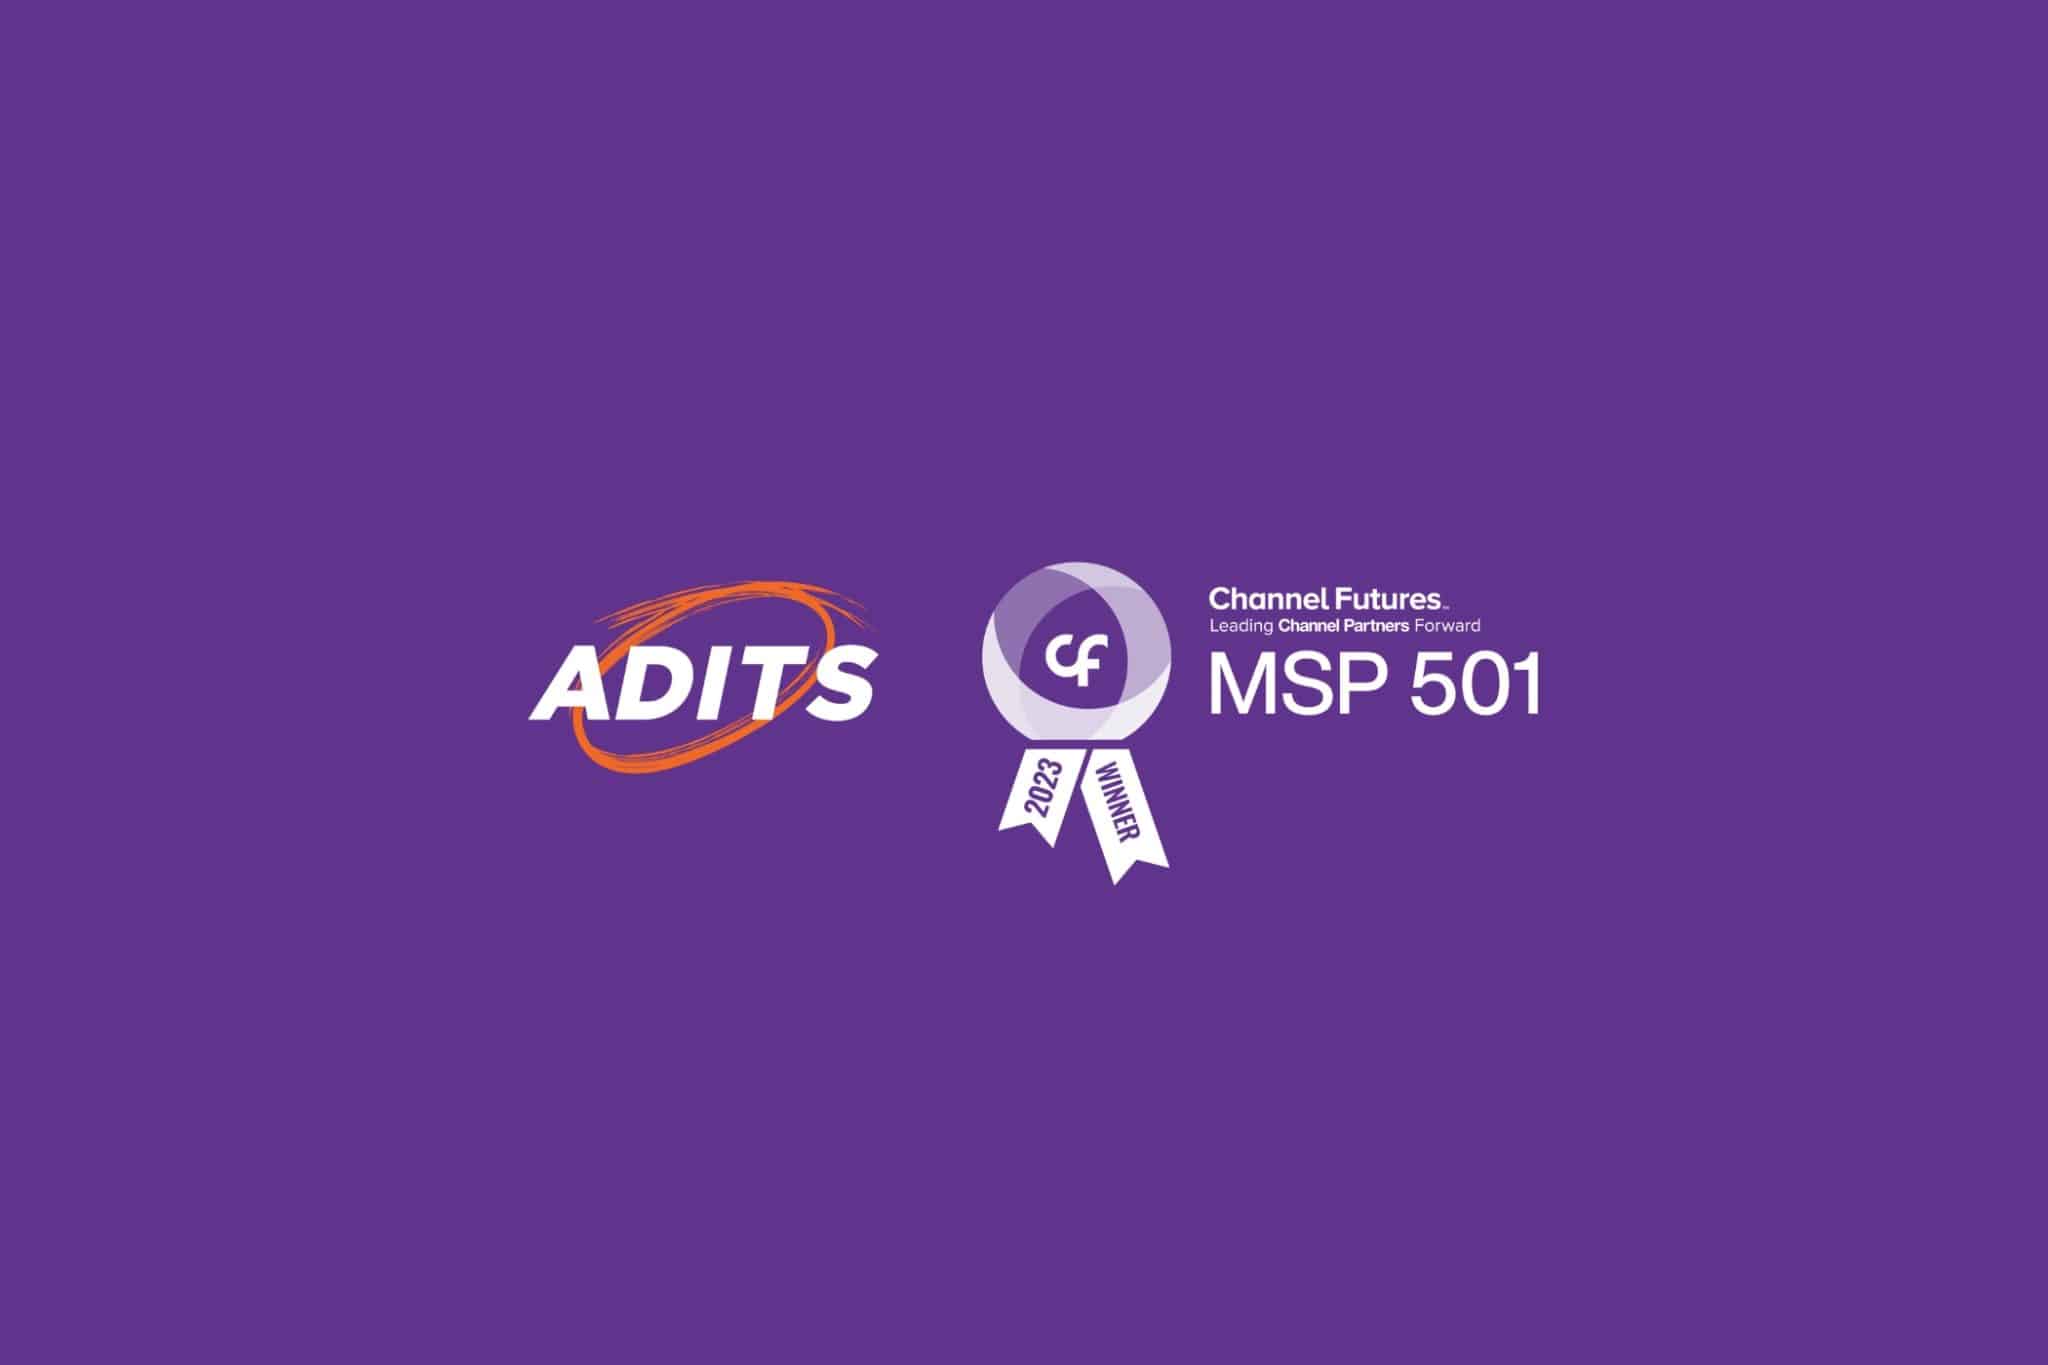 ADITS Makes It To Esteemed MSP 501 List